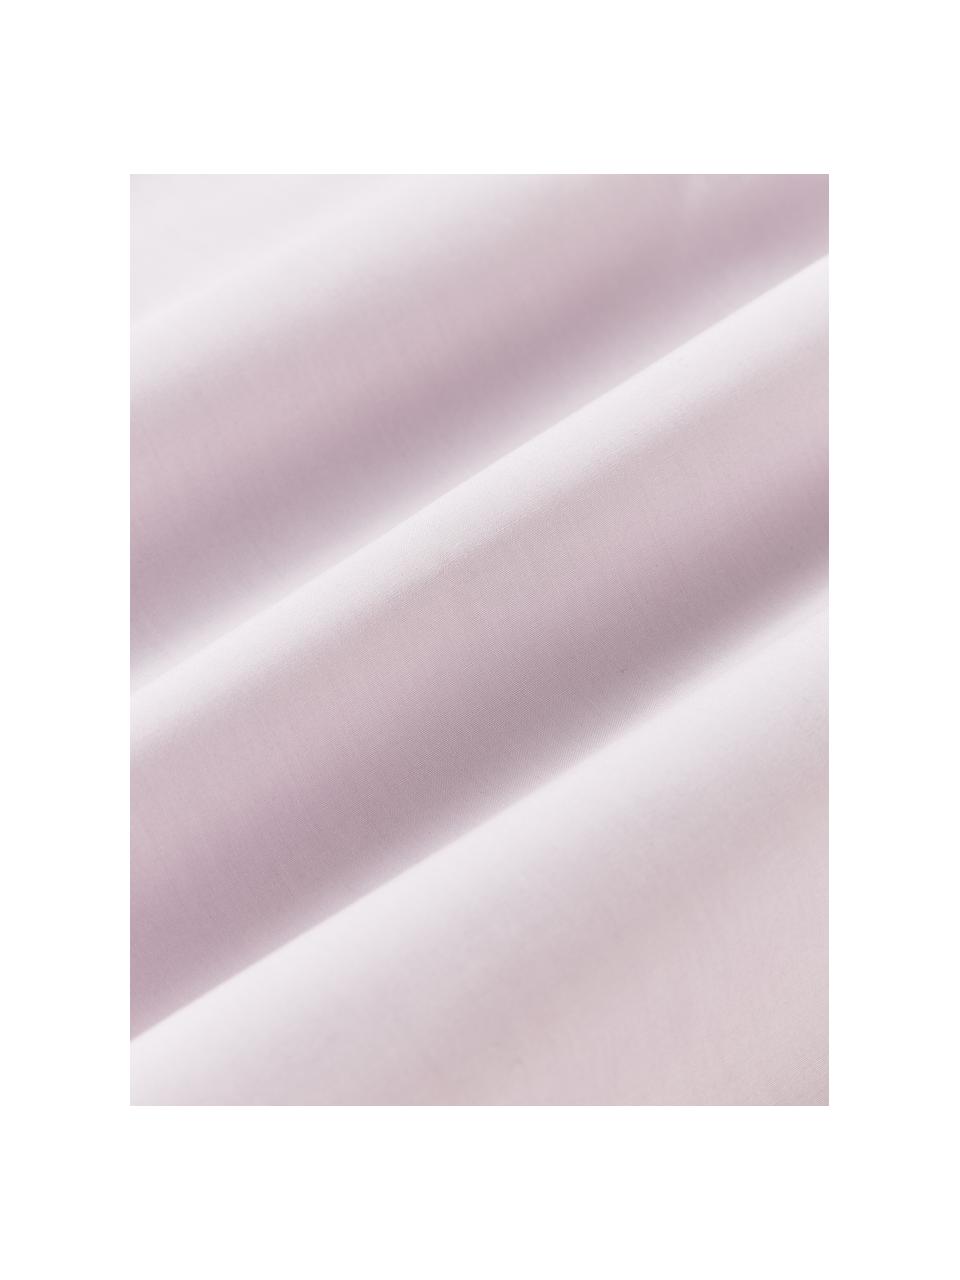 Perkal katoenen laken Elsie, Weeftechniek: perkal Draaddichtheid 200, Lavendel, B 240 x L 280 cm